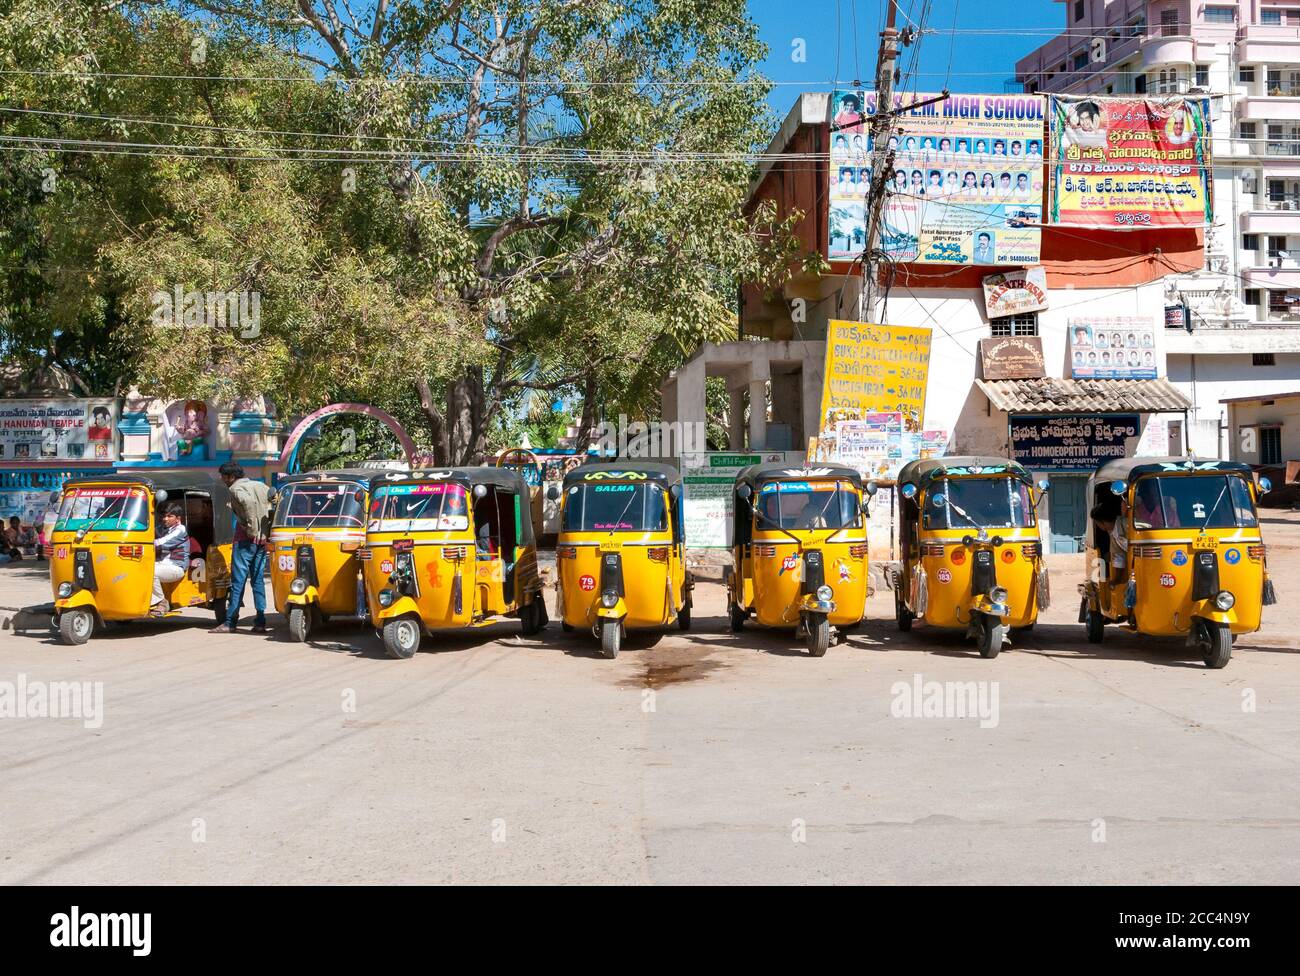 Puttaparthi, Andhra Pradesh, India - January 13, 2013: Yellow rickshaw taxis on a road in Puttaparthi village. Stock Photo